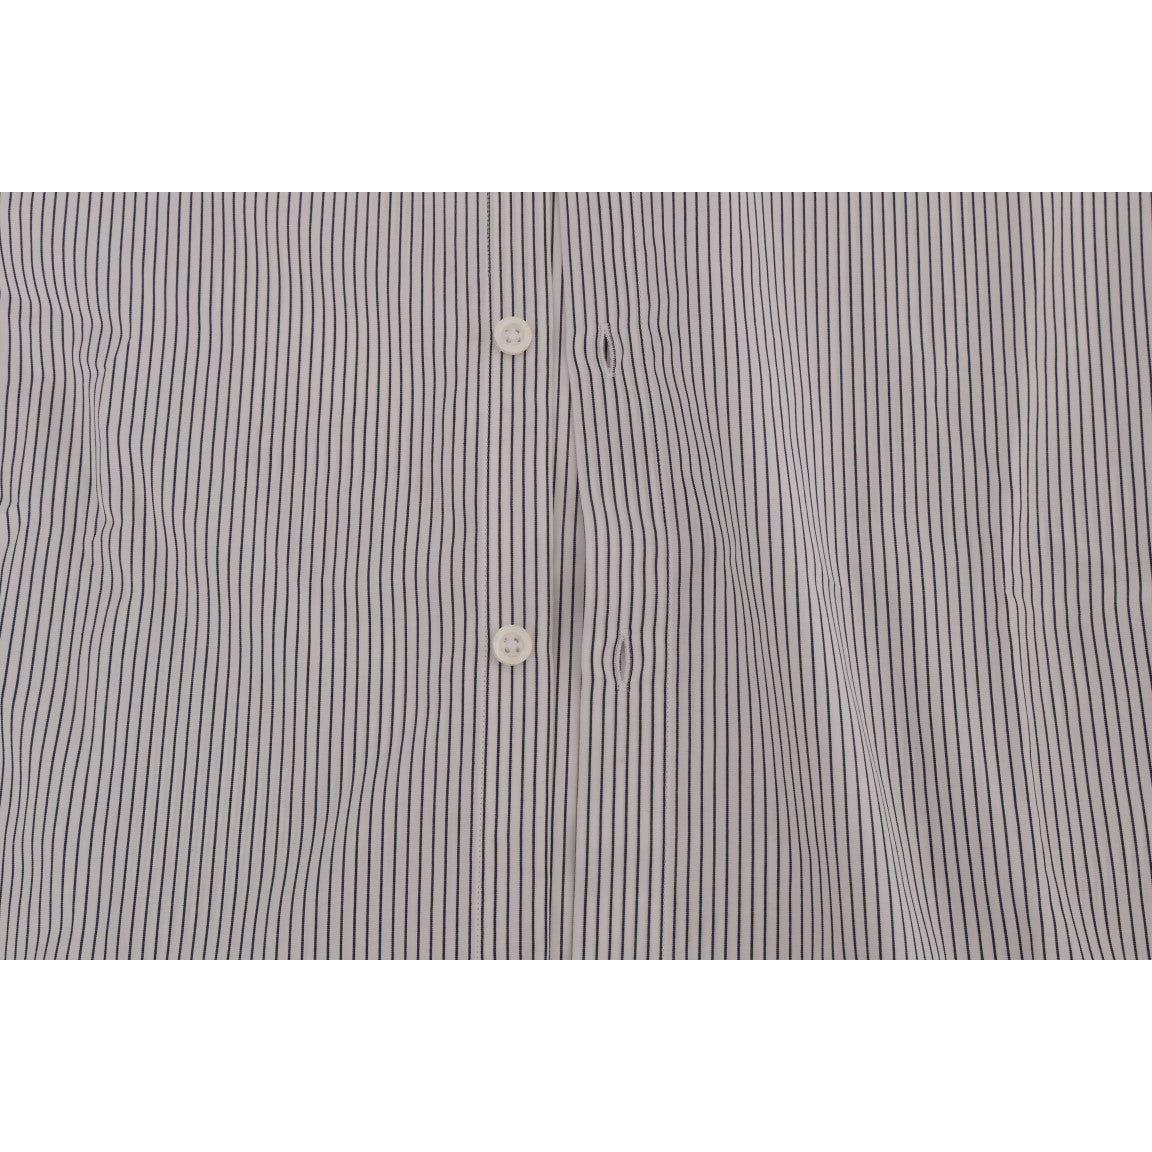 Frankie Morello Elegant White & Blue Striped Casual Shirt white-blue-striped-casual-cotton-regular-fit-shirt 457870-white-blue-striped-casual-cotton-regular-fit-shirt-4.jpg